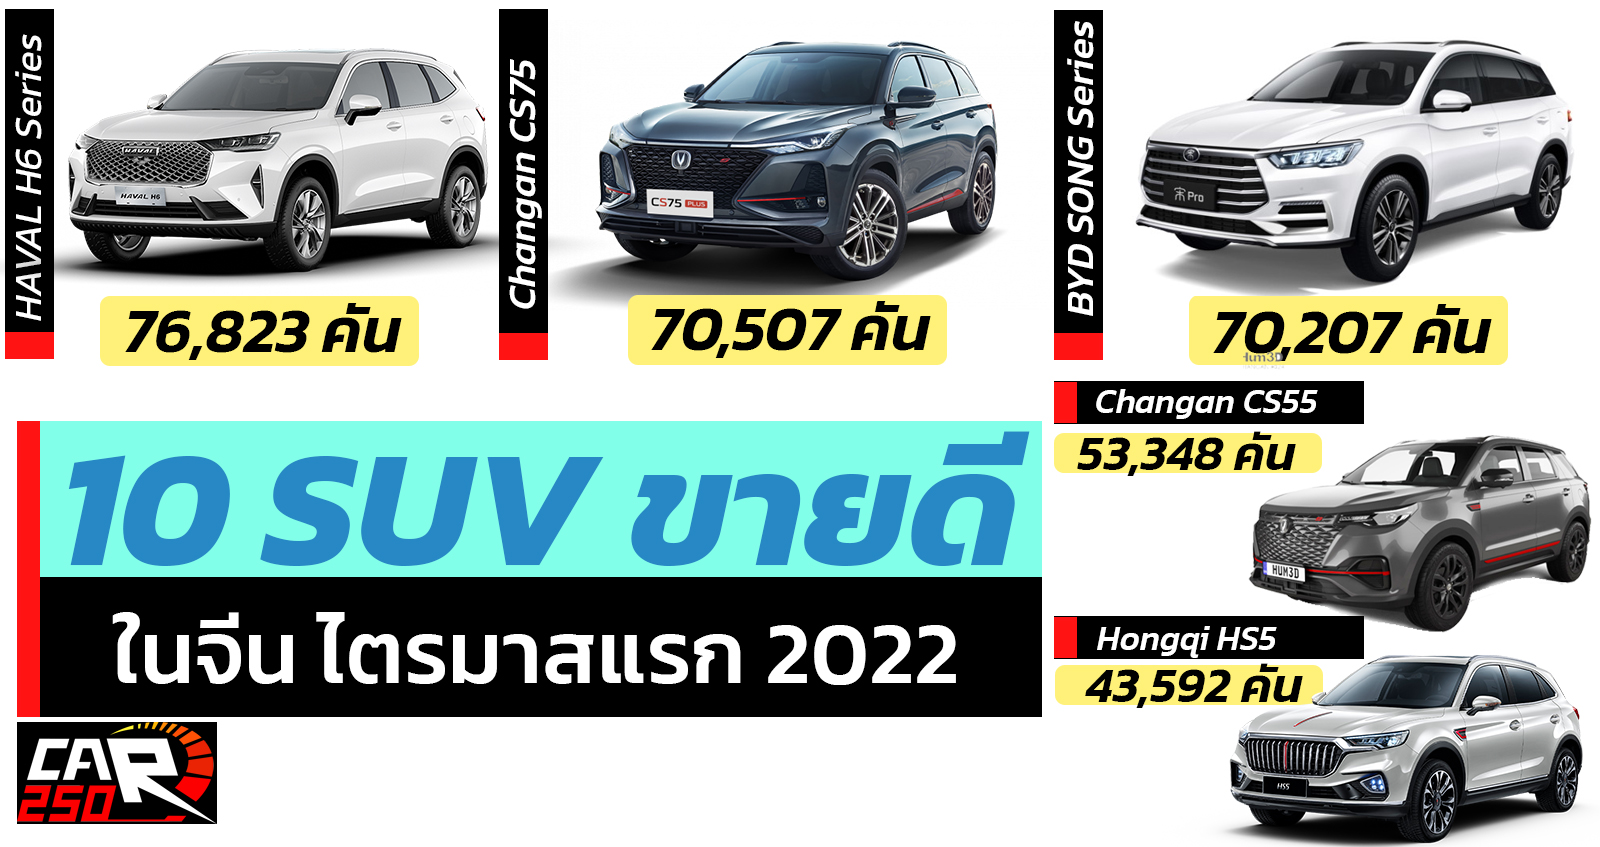 10 SUV ขายดีในจีน ไตรมาสแรก Q1 มกราคม – มีนาคม 2022 HAVAL H6 ยังคงอันดับ 1 แต่เกือบโดนแซง